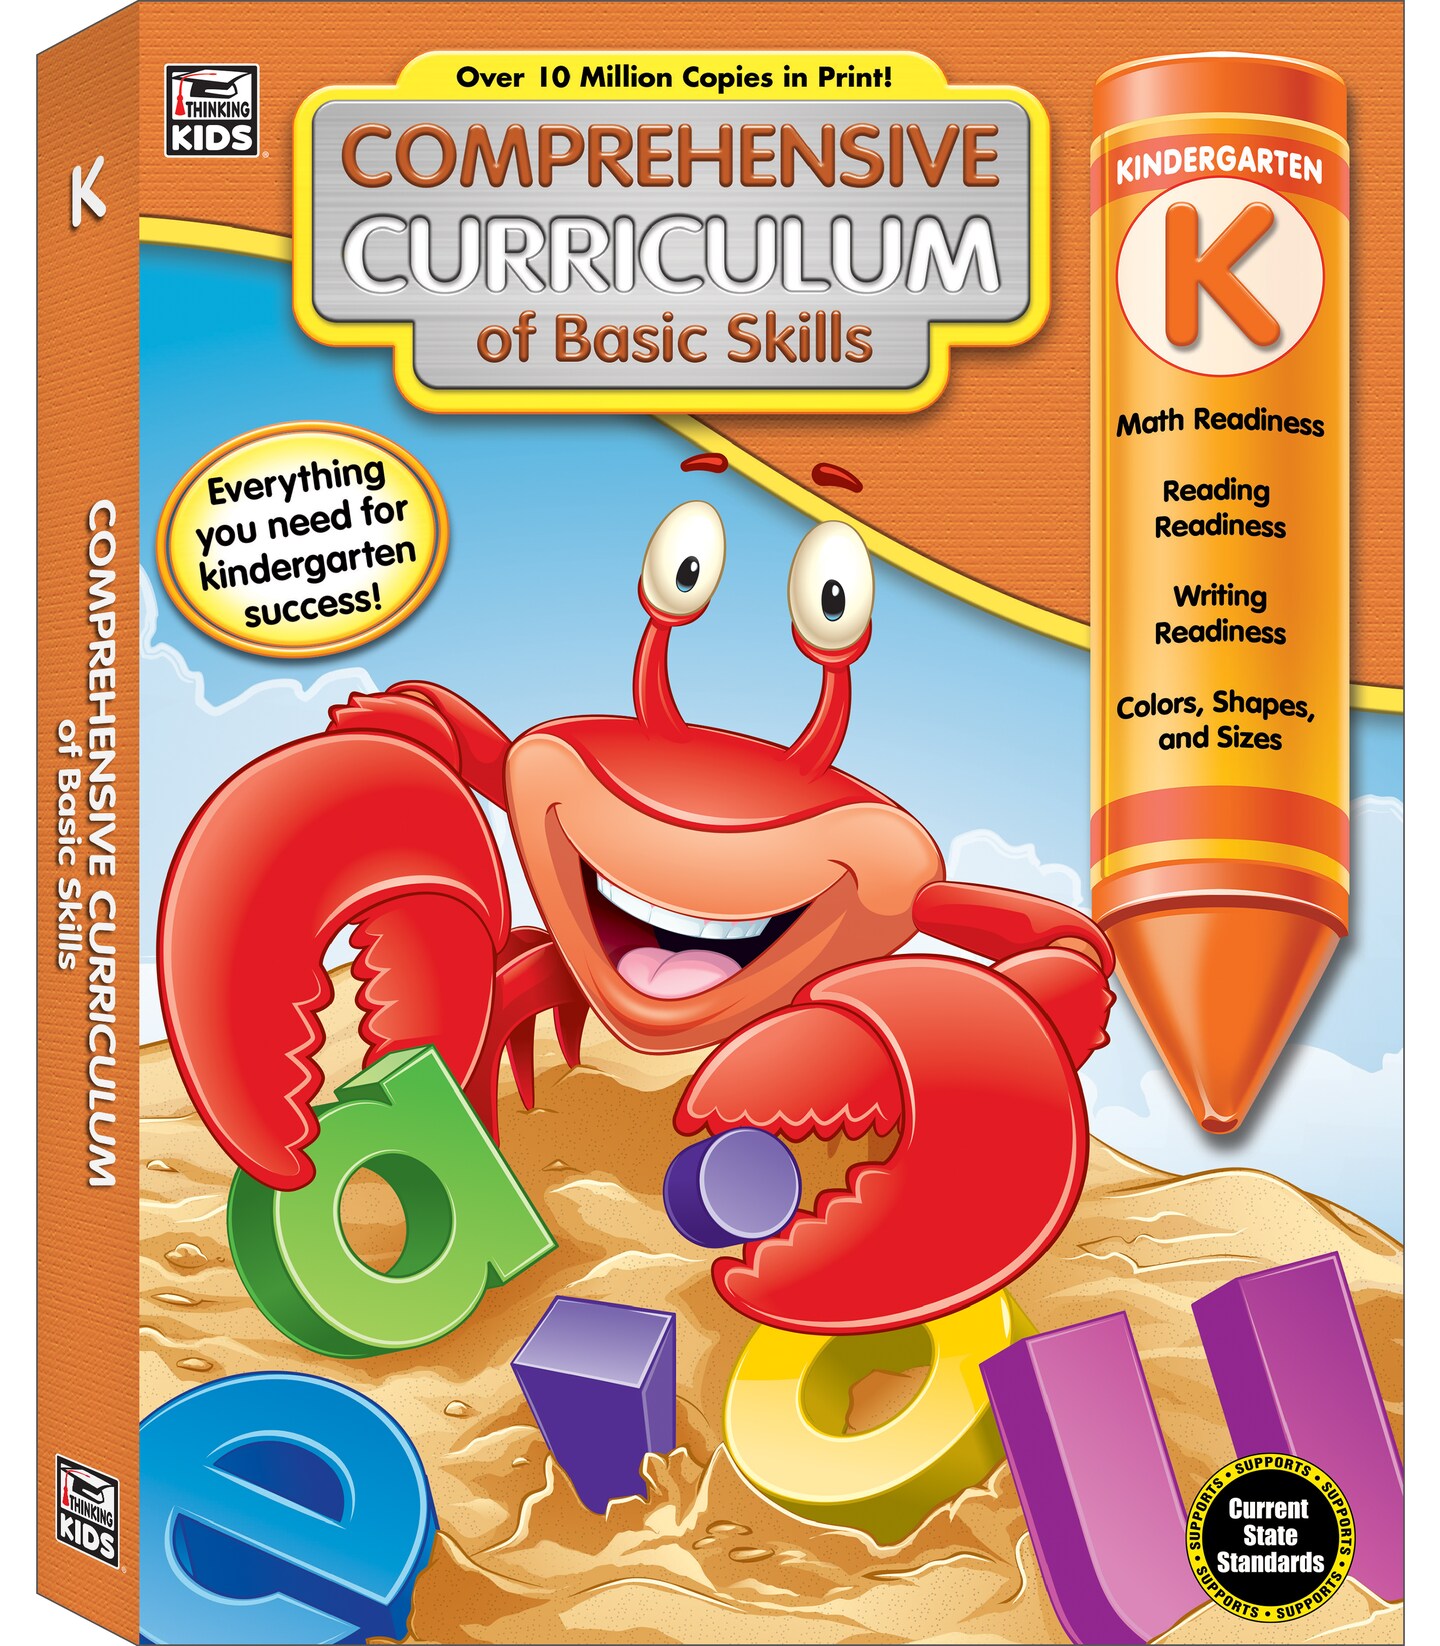 Comprehensive Curriculum of Basic Skills Kindergarten Workbooks All Subjects, Kindergarten Math, Reading Comprehension, Writing Practice, and More, Classroom or Homeschool Curriculum